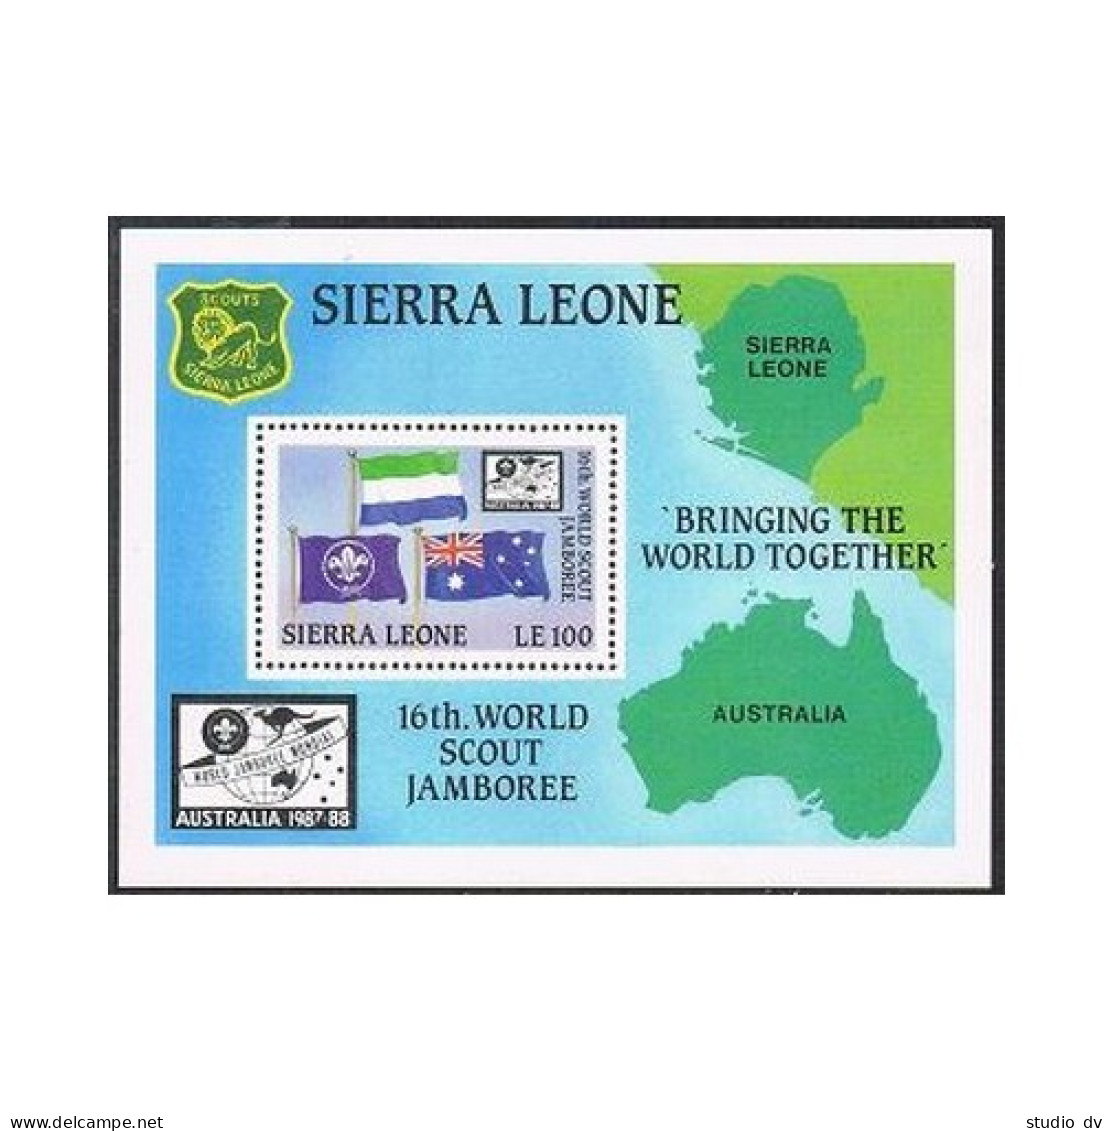 Sierra Leone 928,MNH.Michel 1050 Bl.70. World Scout Jamboree,Australia 1987-88. - Sierra Leone (1961-...)